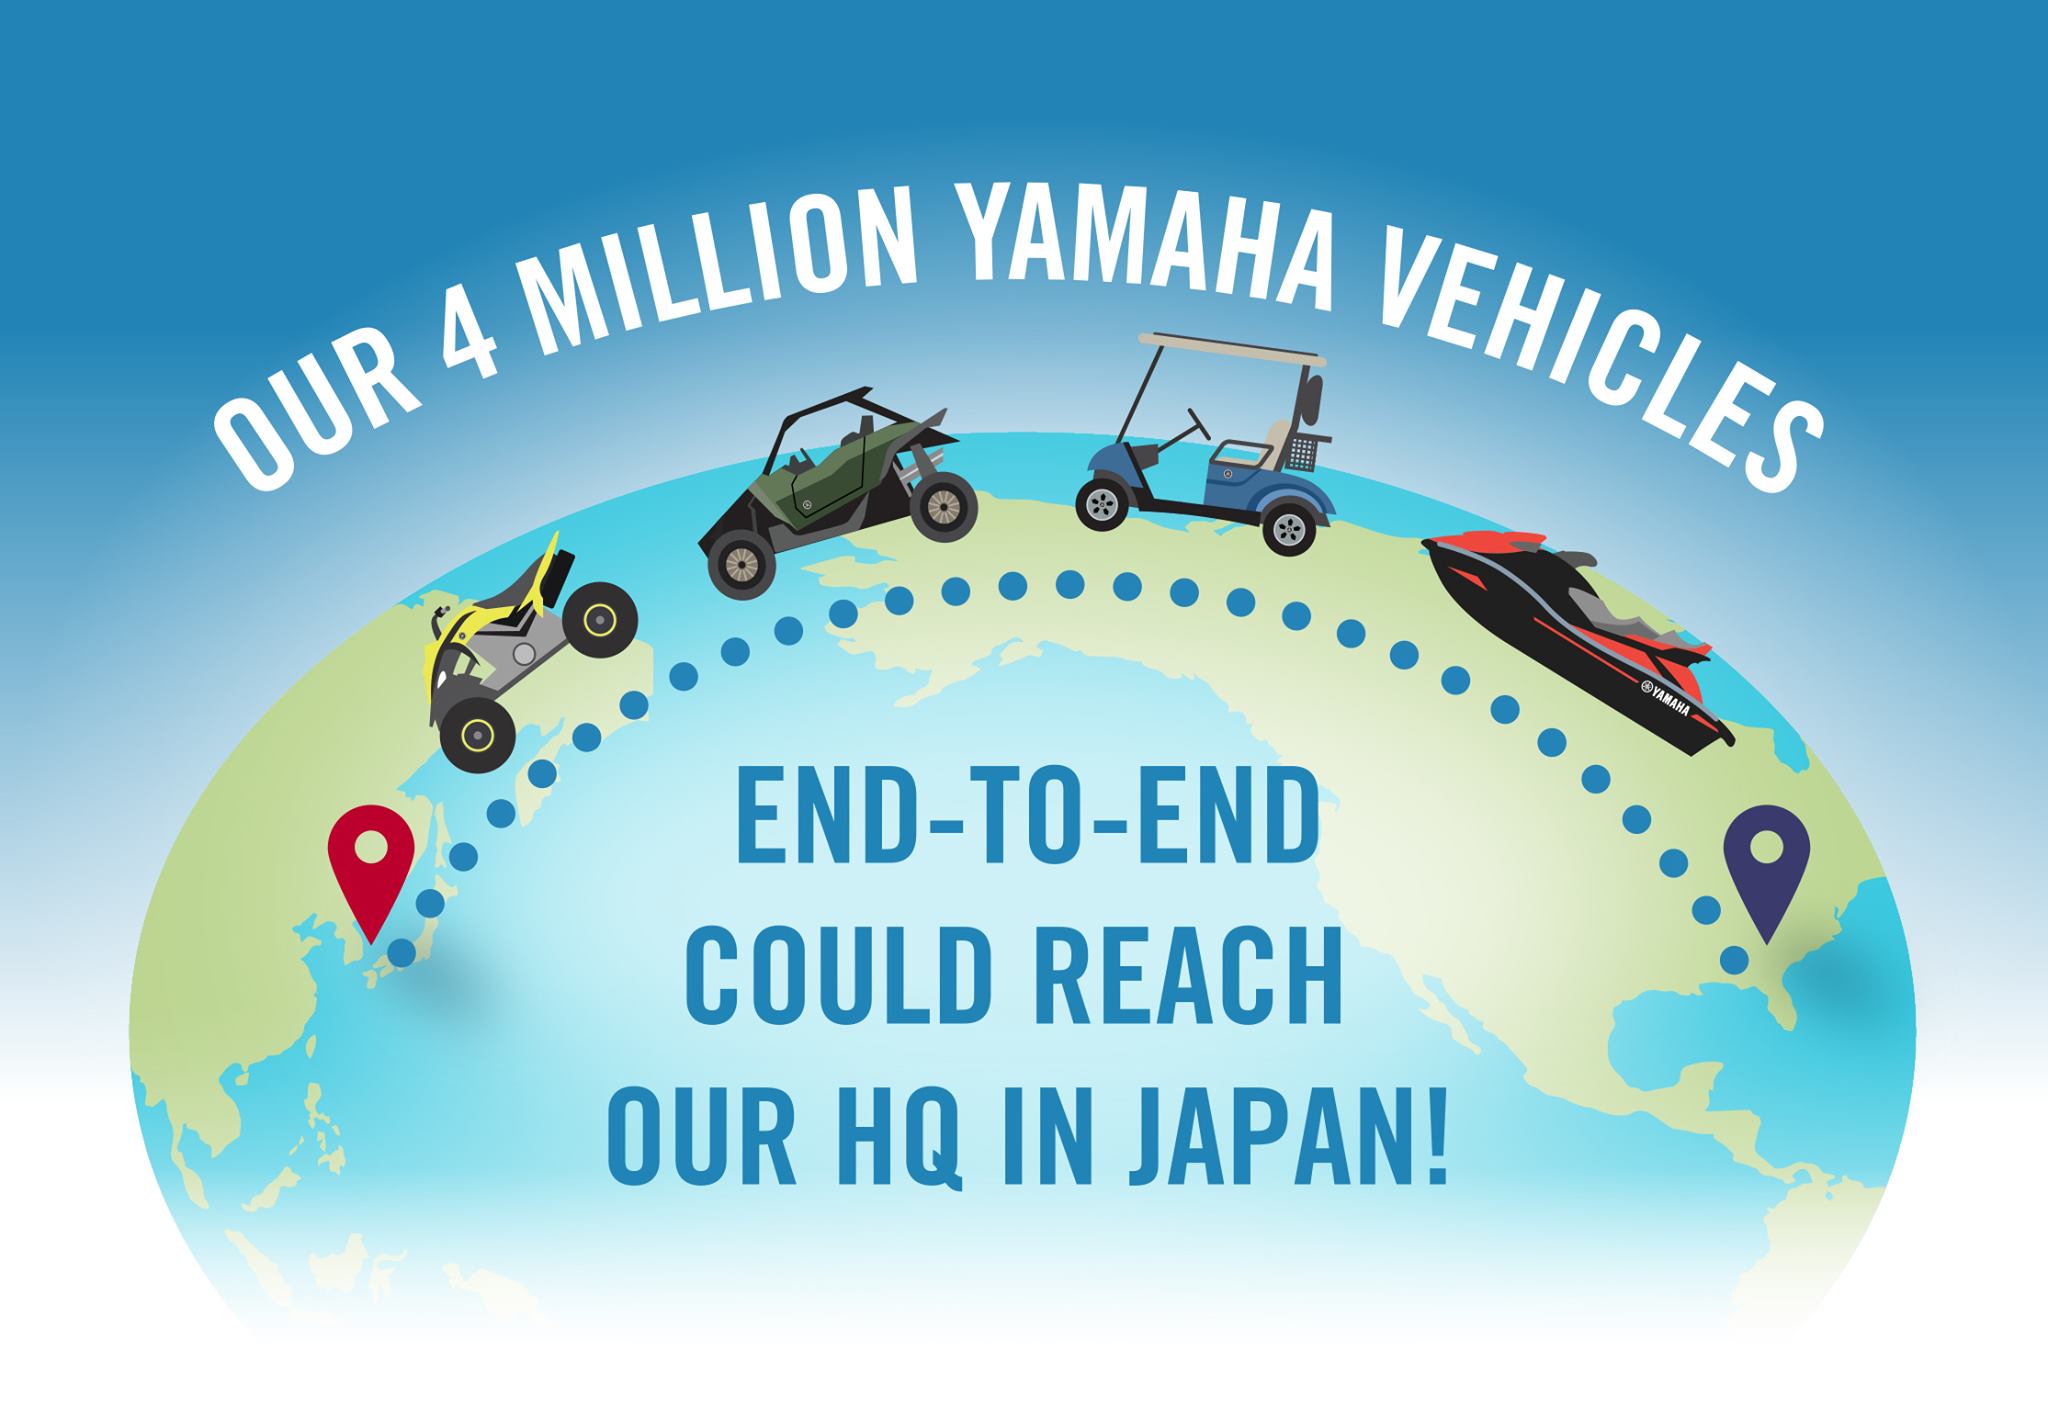 Yamaha 4 Million Vehicles